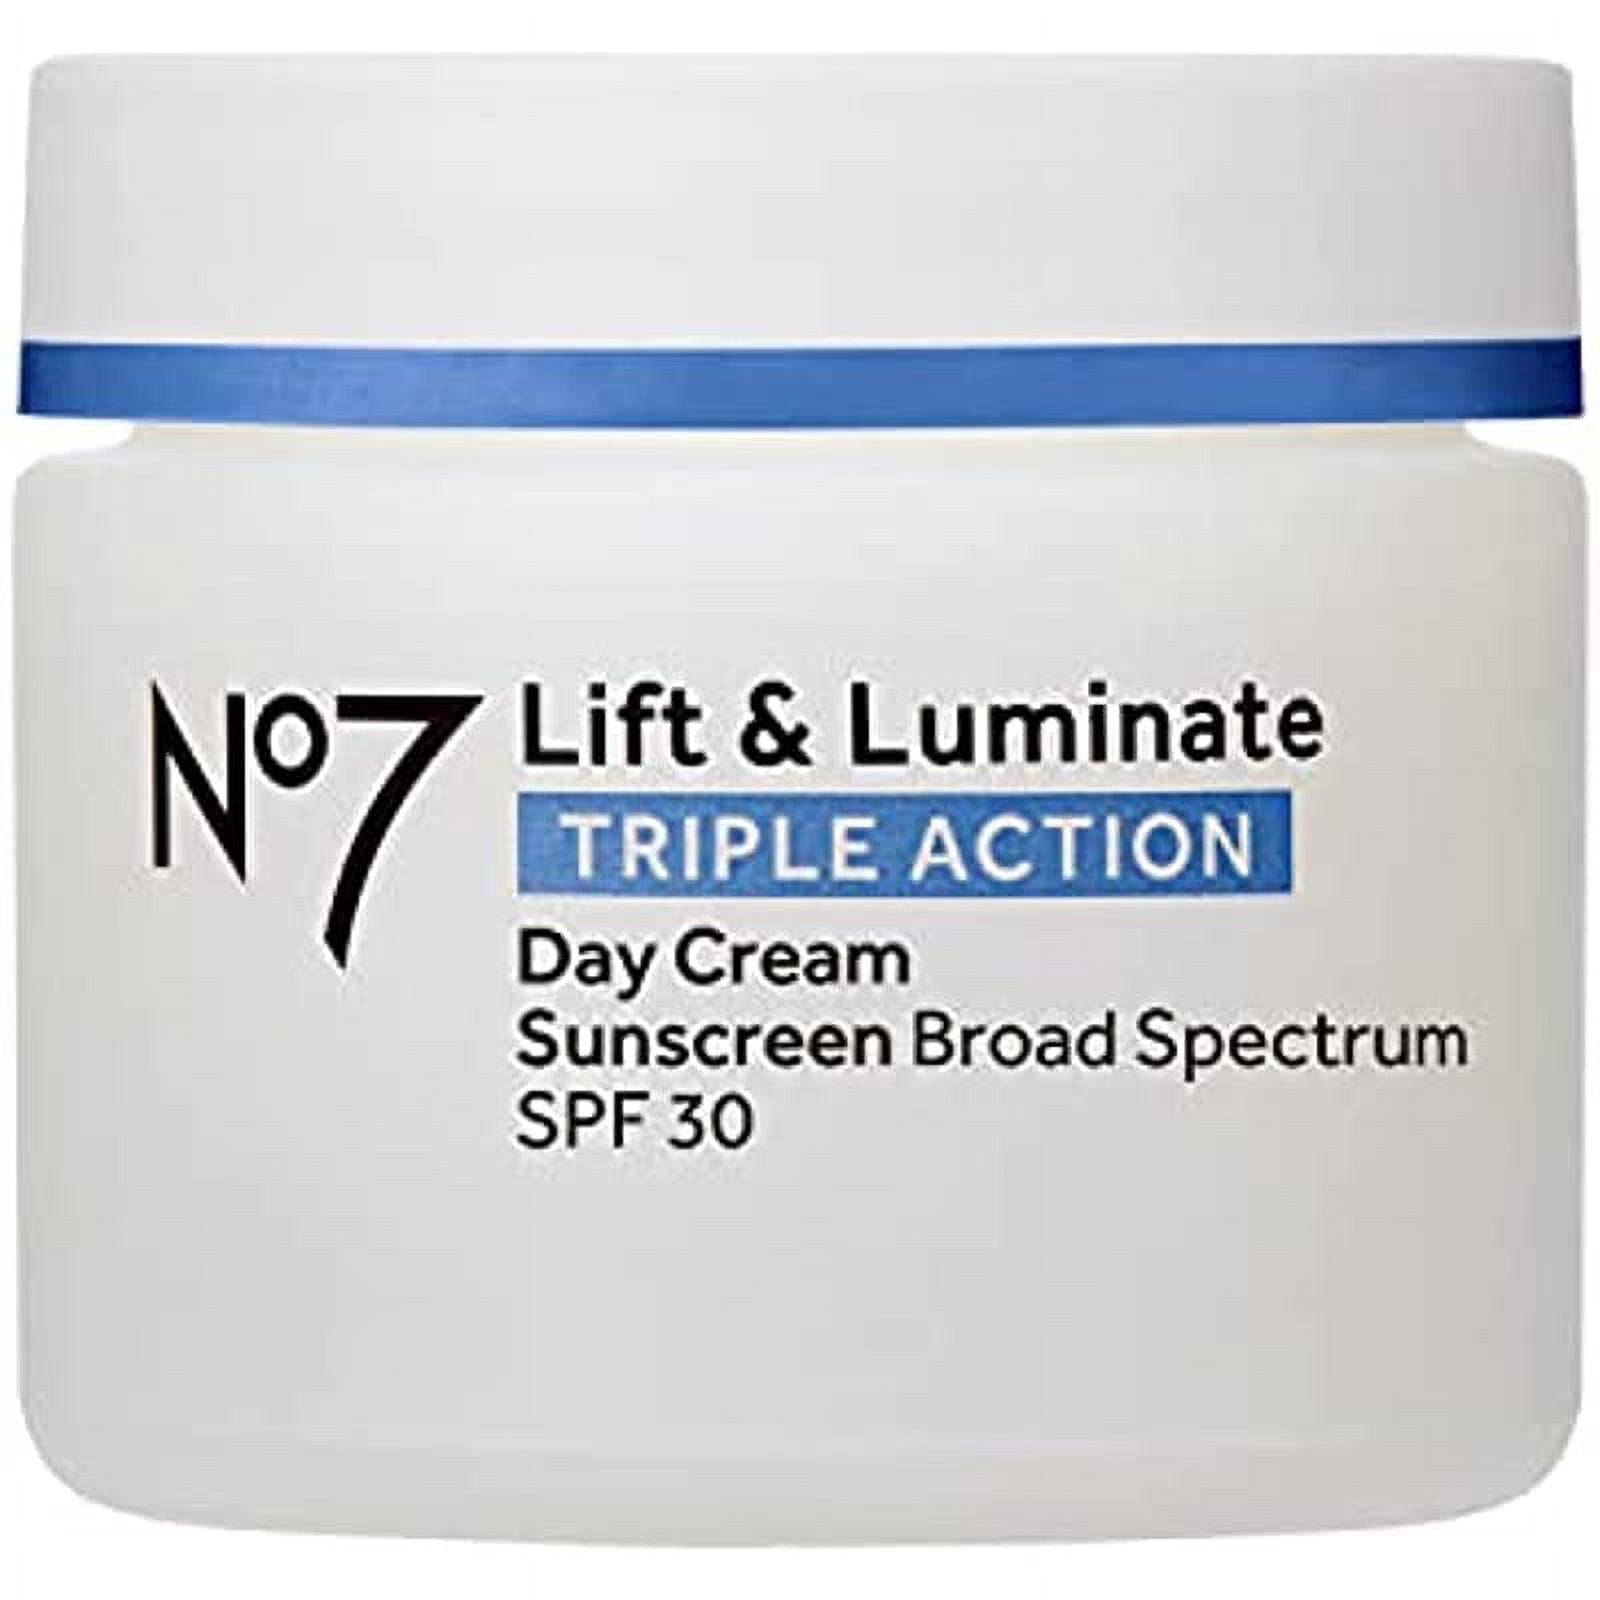 No7 Lift & Luminate Triple Action Day Cream SPF 30, 1.69 fl oz